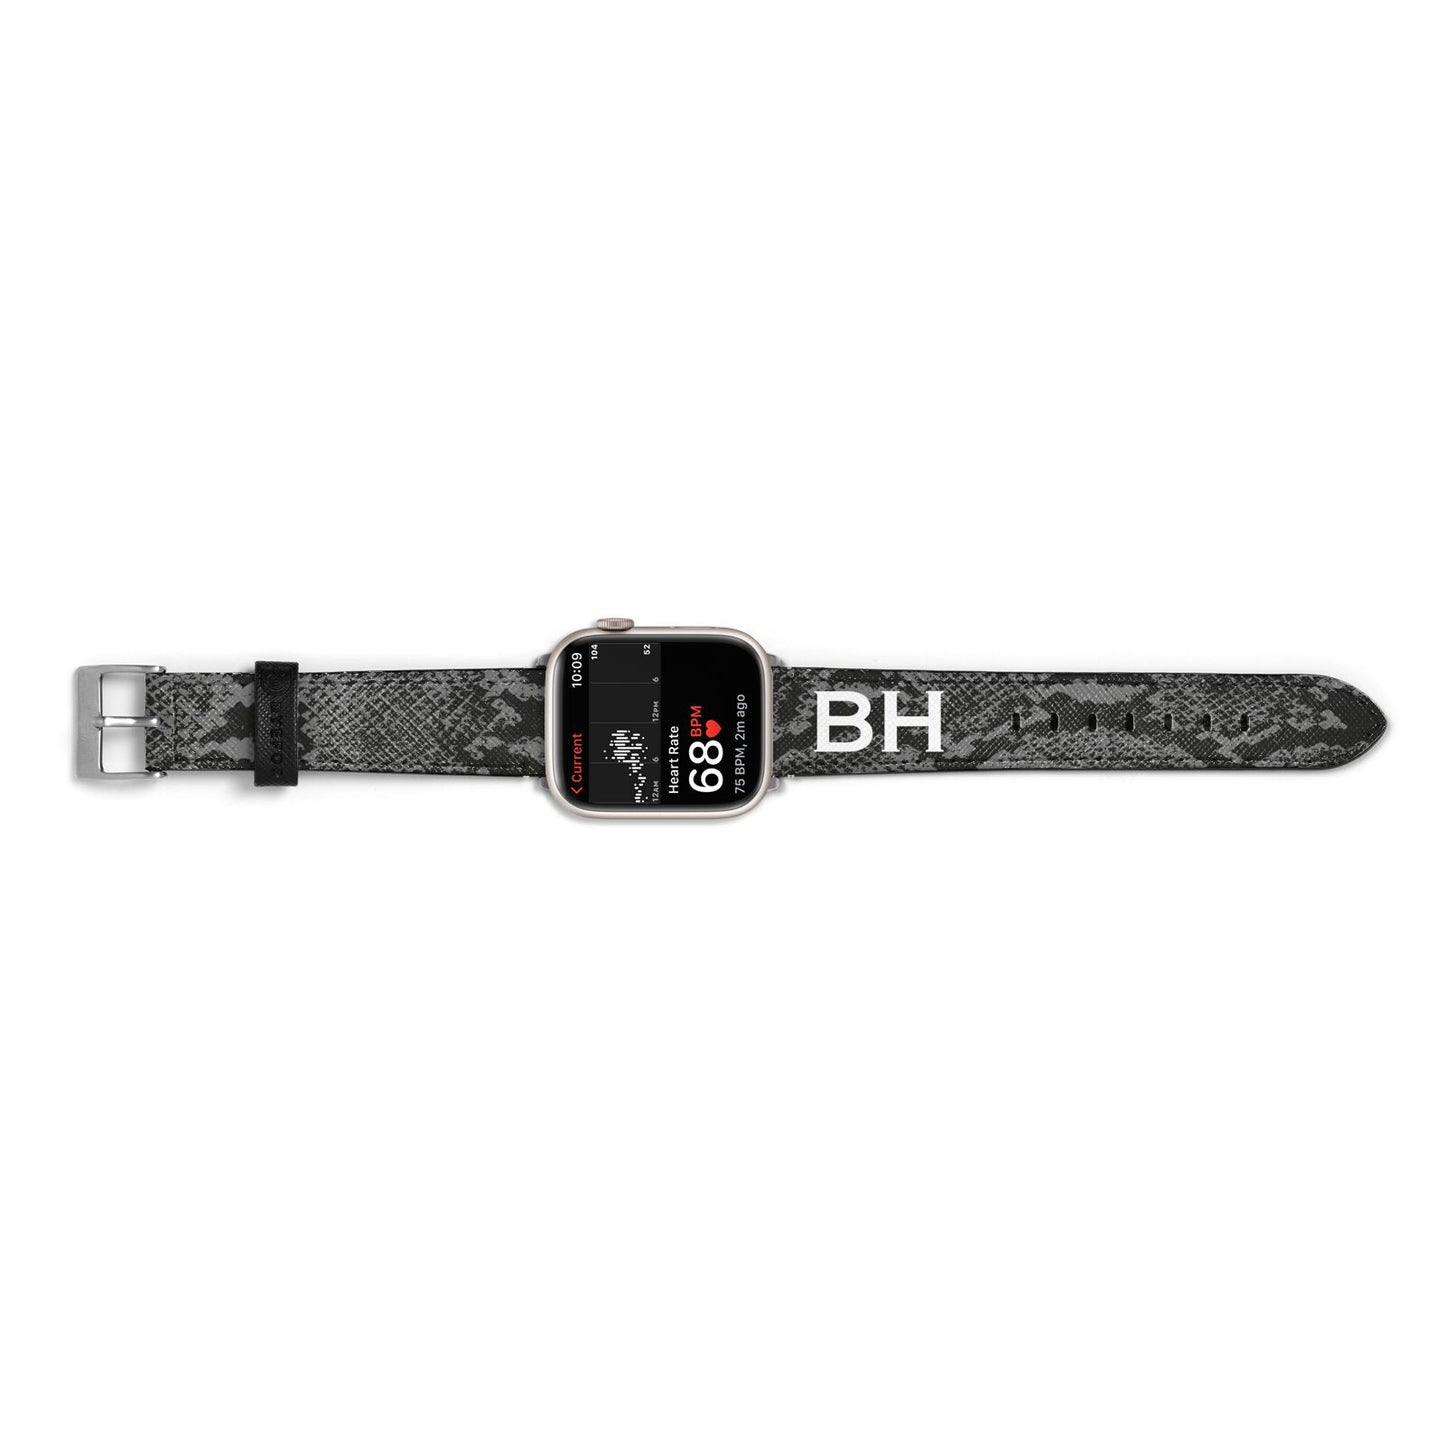 Personalised Snakeskin Apple Watch Strap Size 38mm Landscape Image Silver Hardware